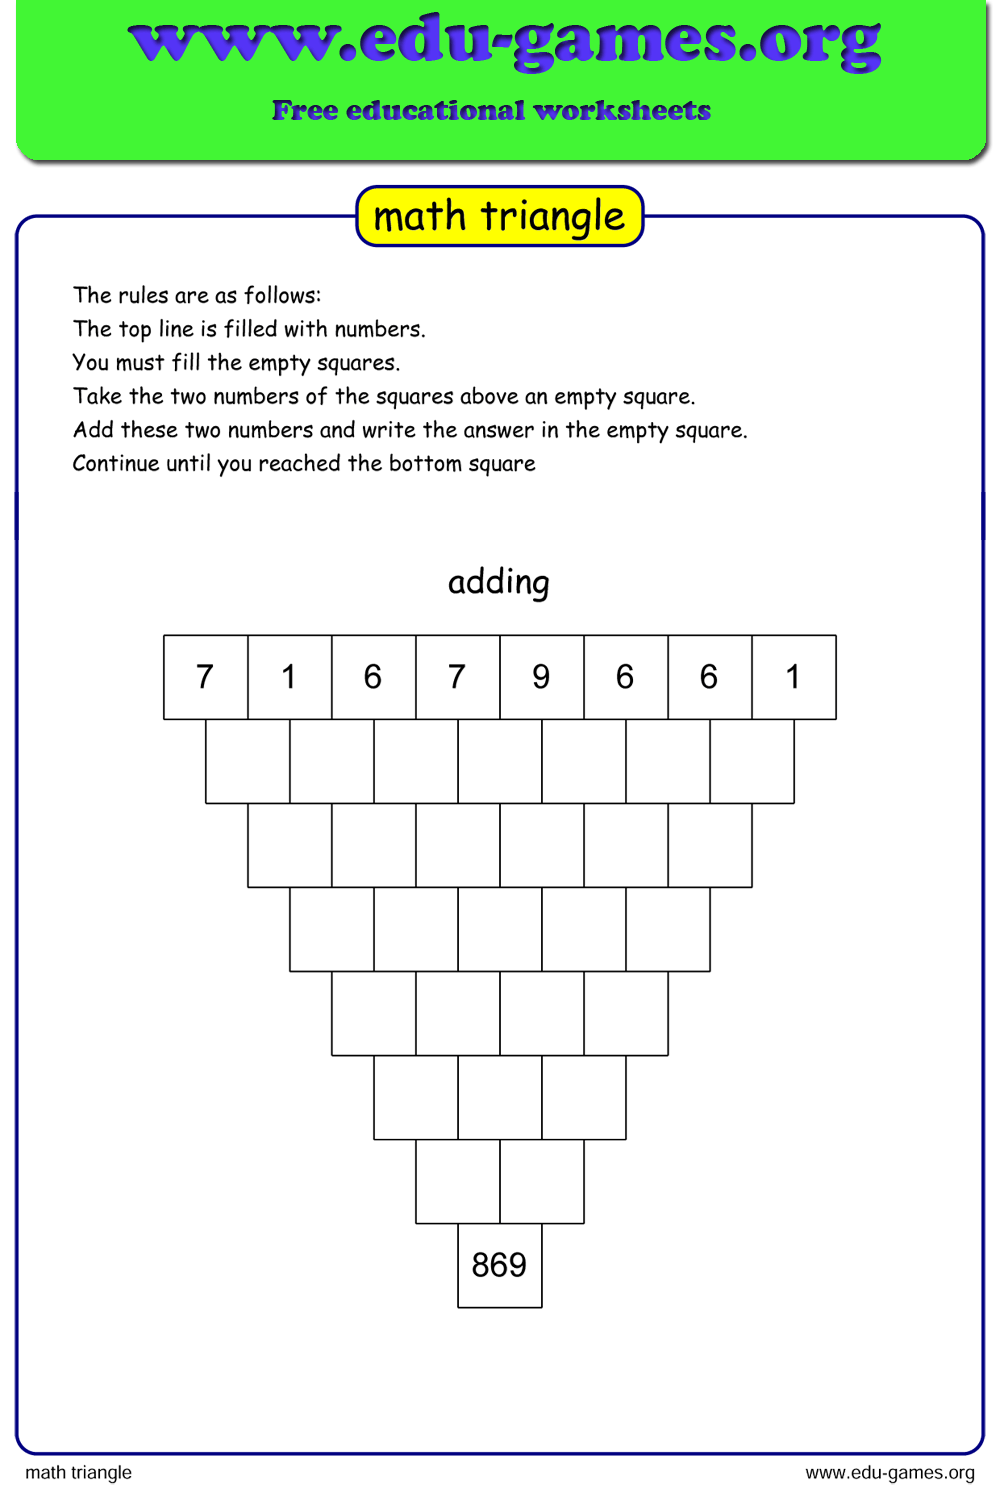 Math Triangle Puzzle Worksheet Maker Edu games